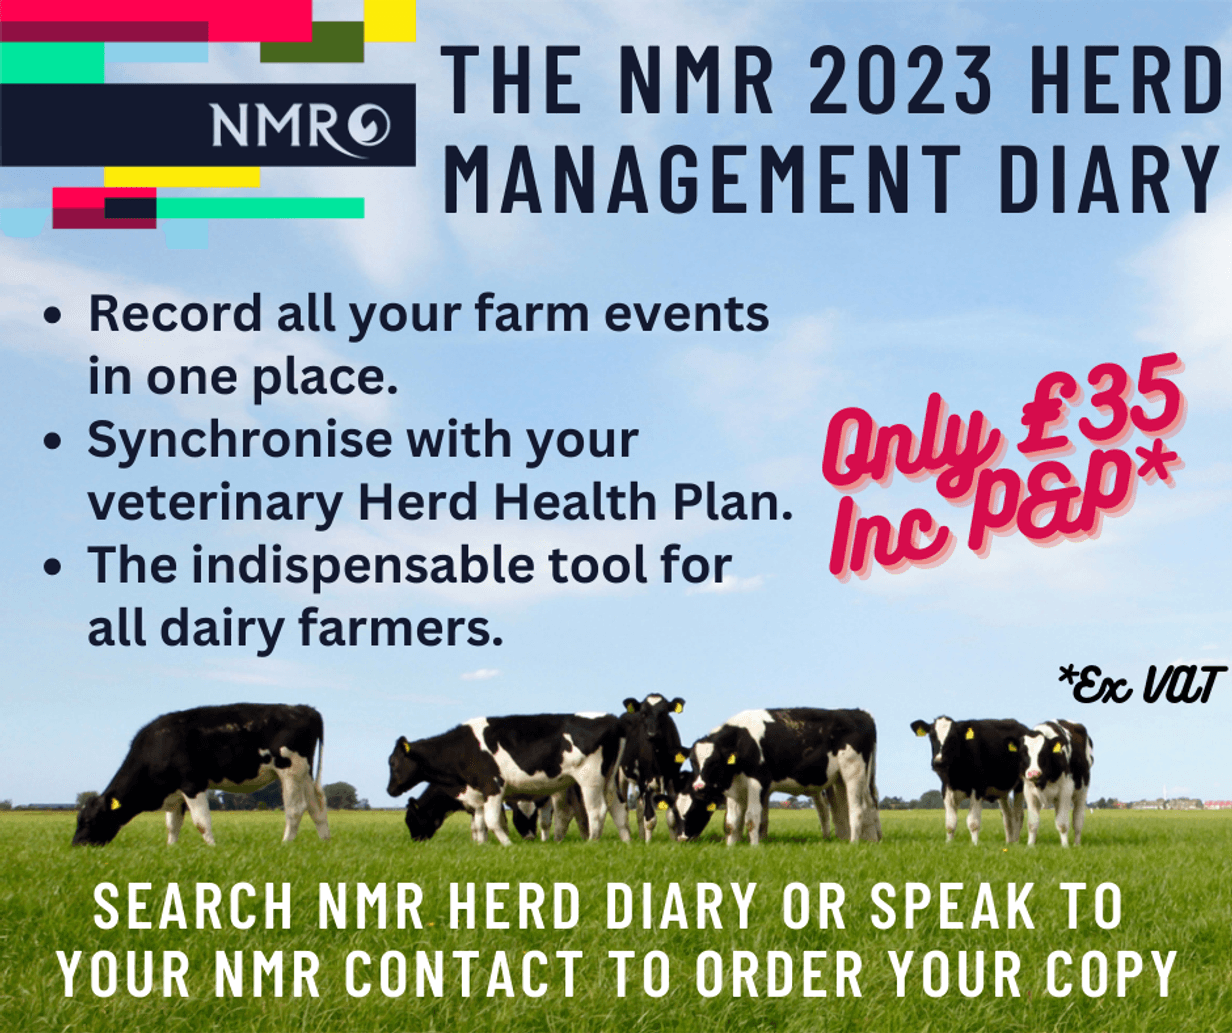 Herd Management Diary promo 2023